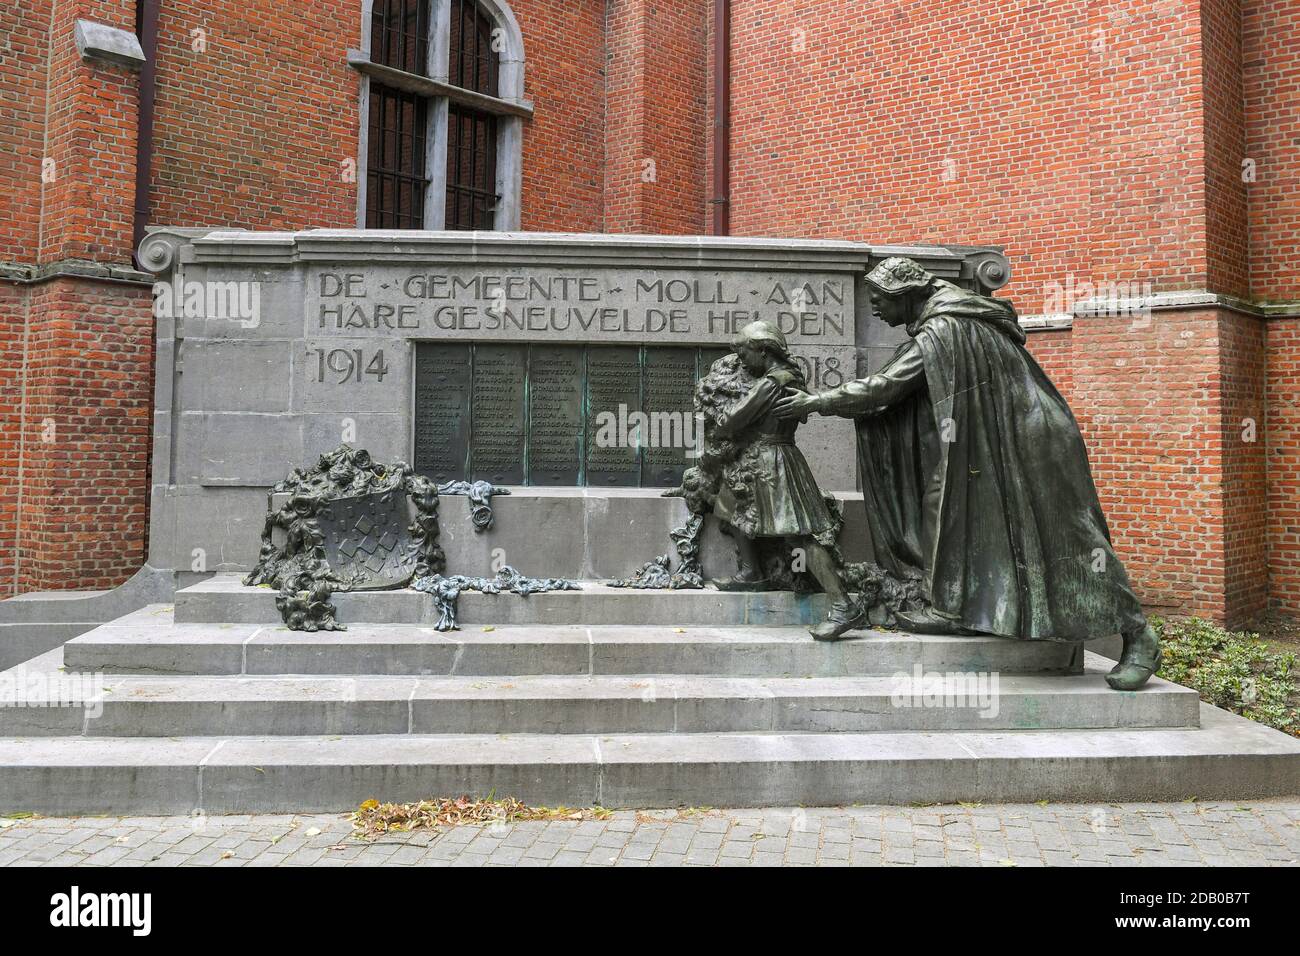 Illustration picture shows a World War I memorial at the Sint-Pieter-en-Pauwerkerk church in Mol, Monday 29 June 2020. BELGA PHOTO LUC CLAESSEN Stock Photo